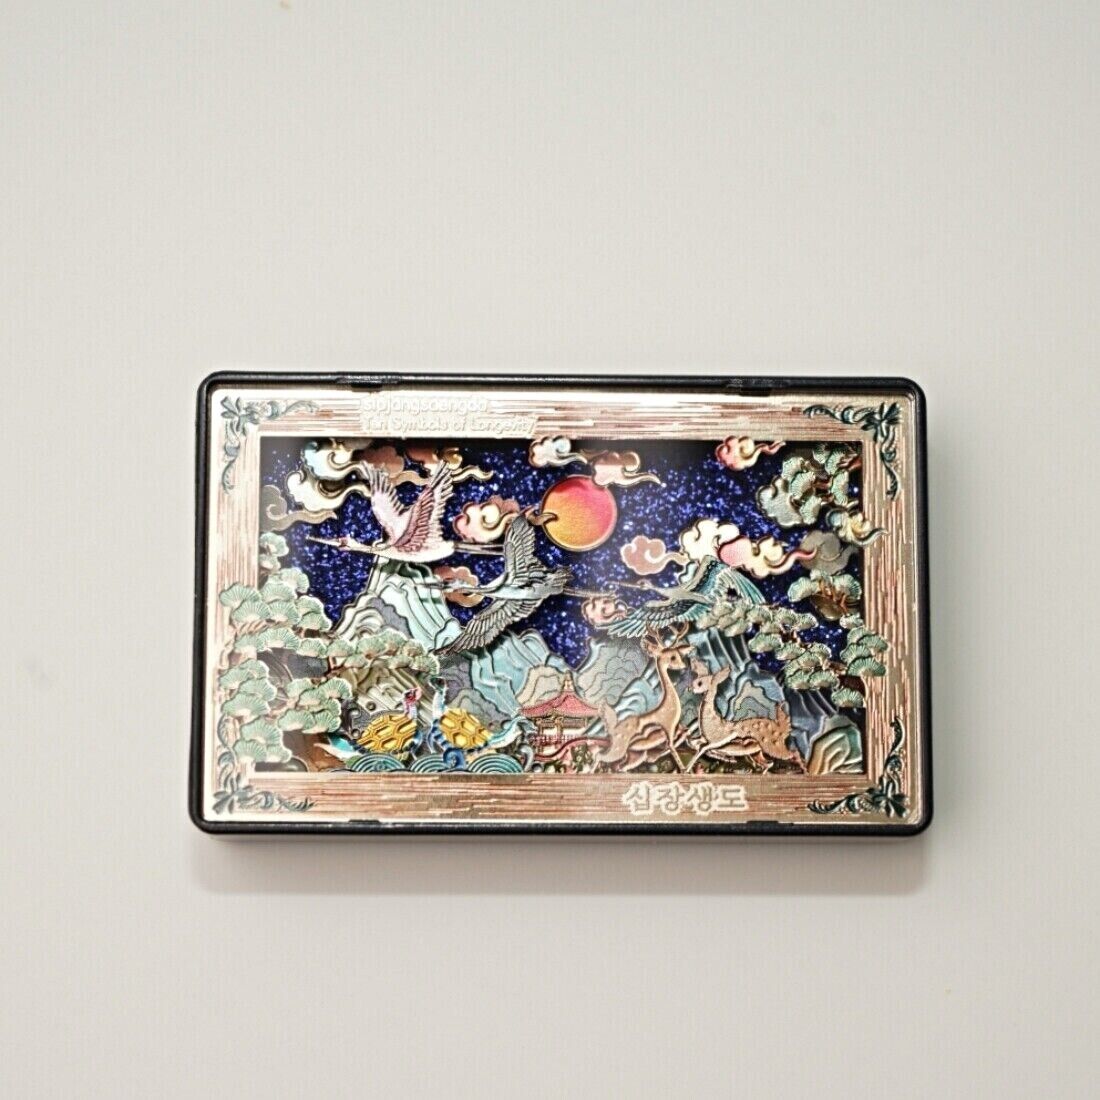 Handmade 3D Fridge Magnet Travel Souvenirs by Korean Artisans: Perfect Gift